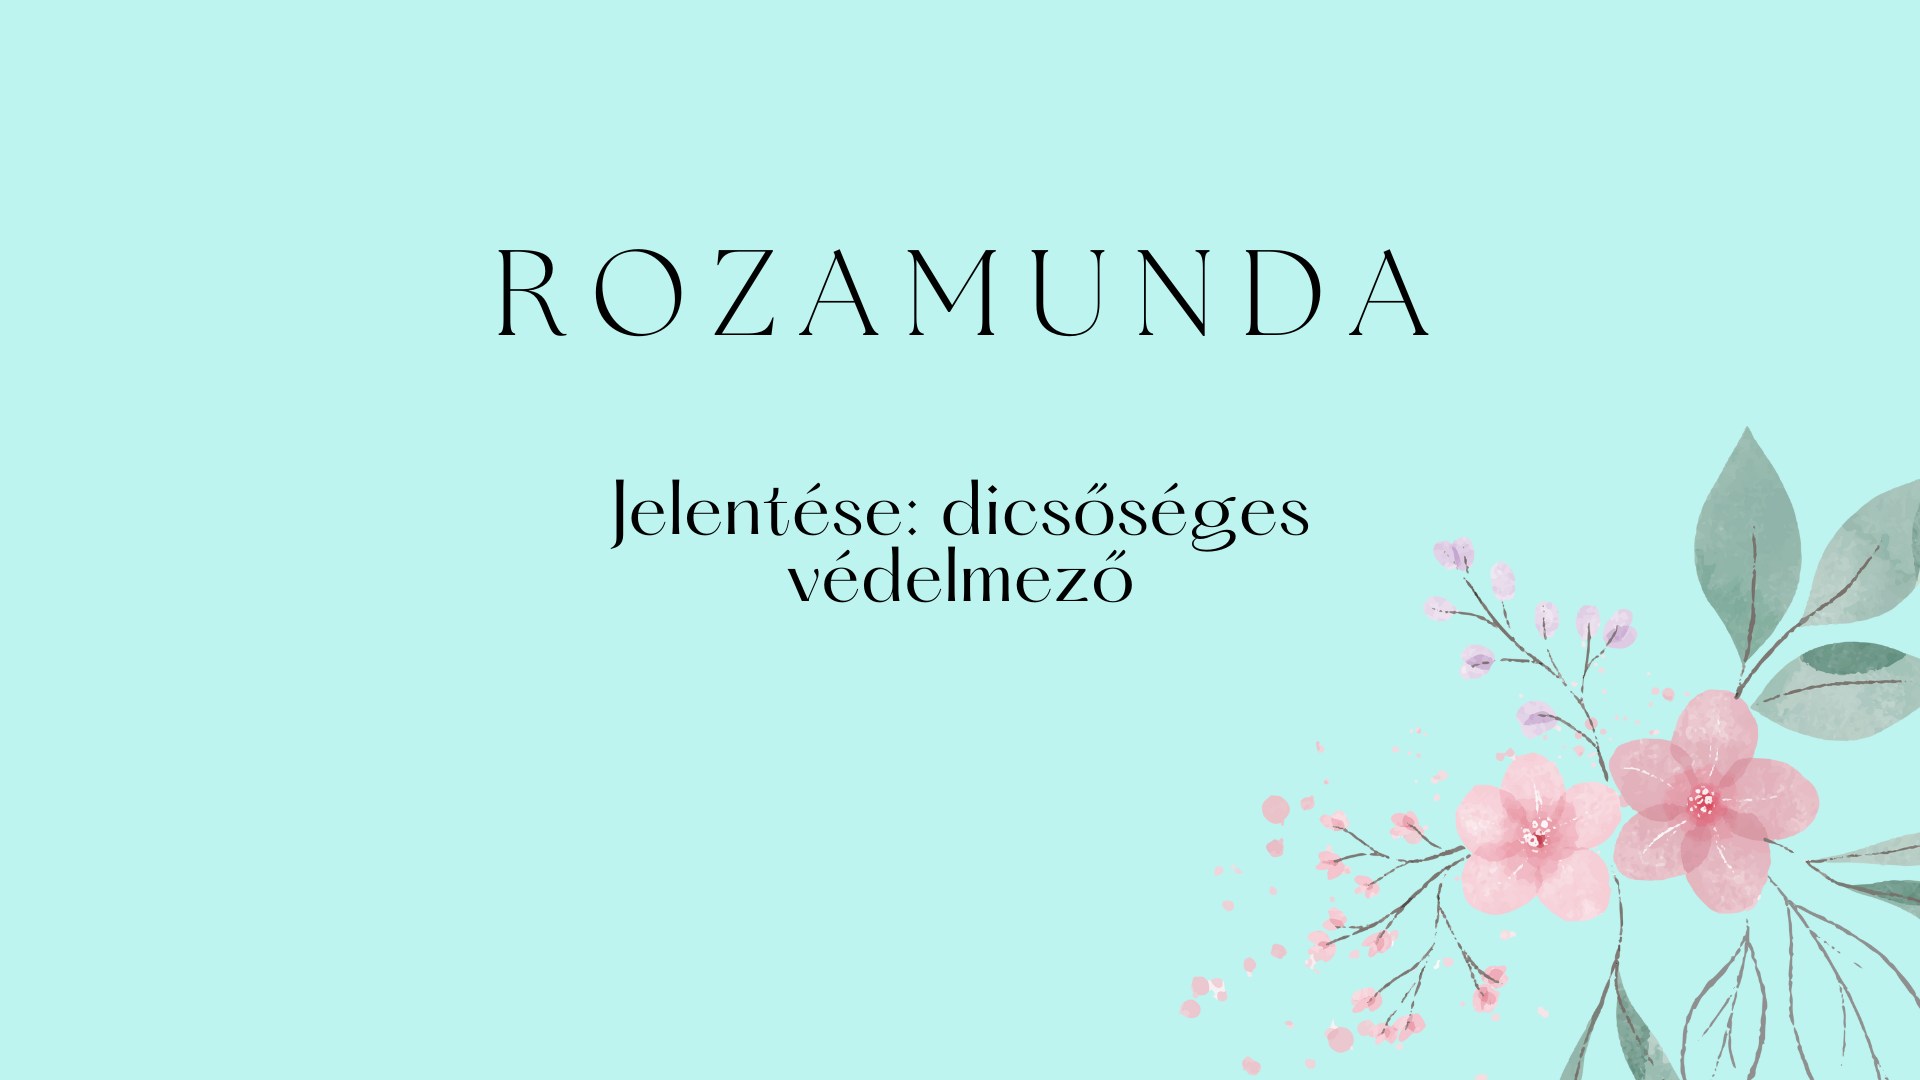 Rozamunda név jelentése